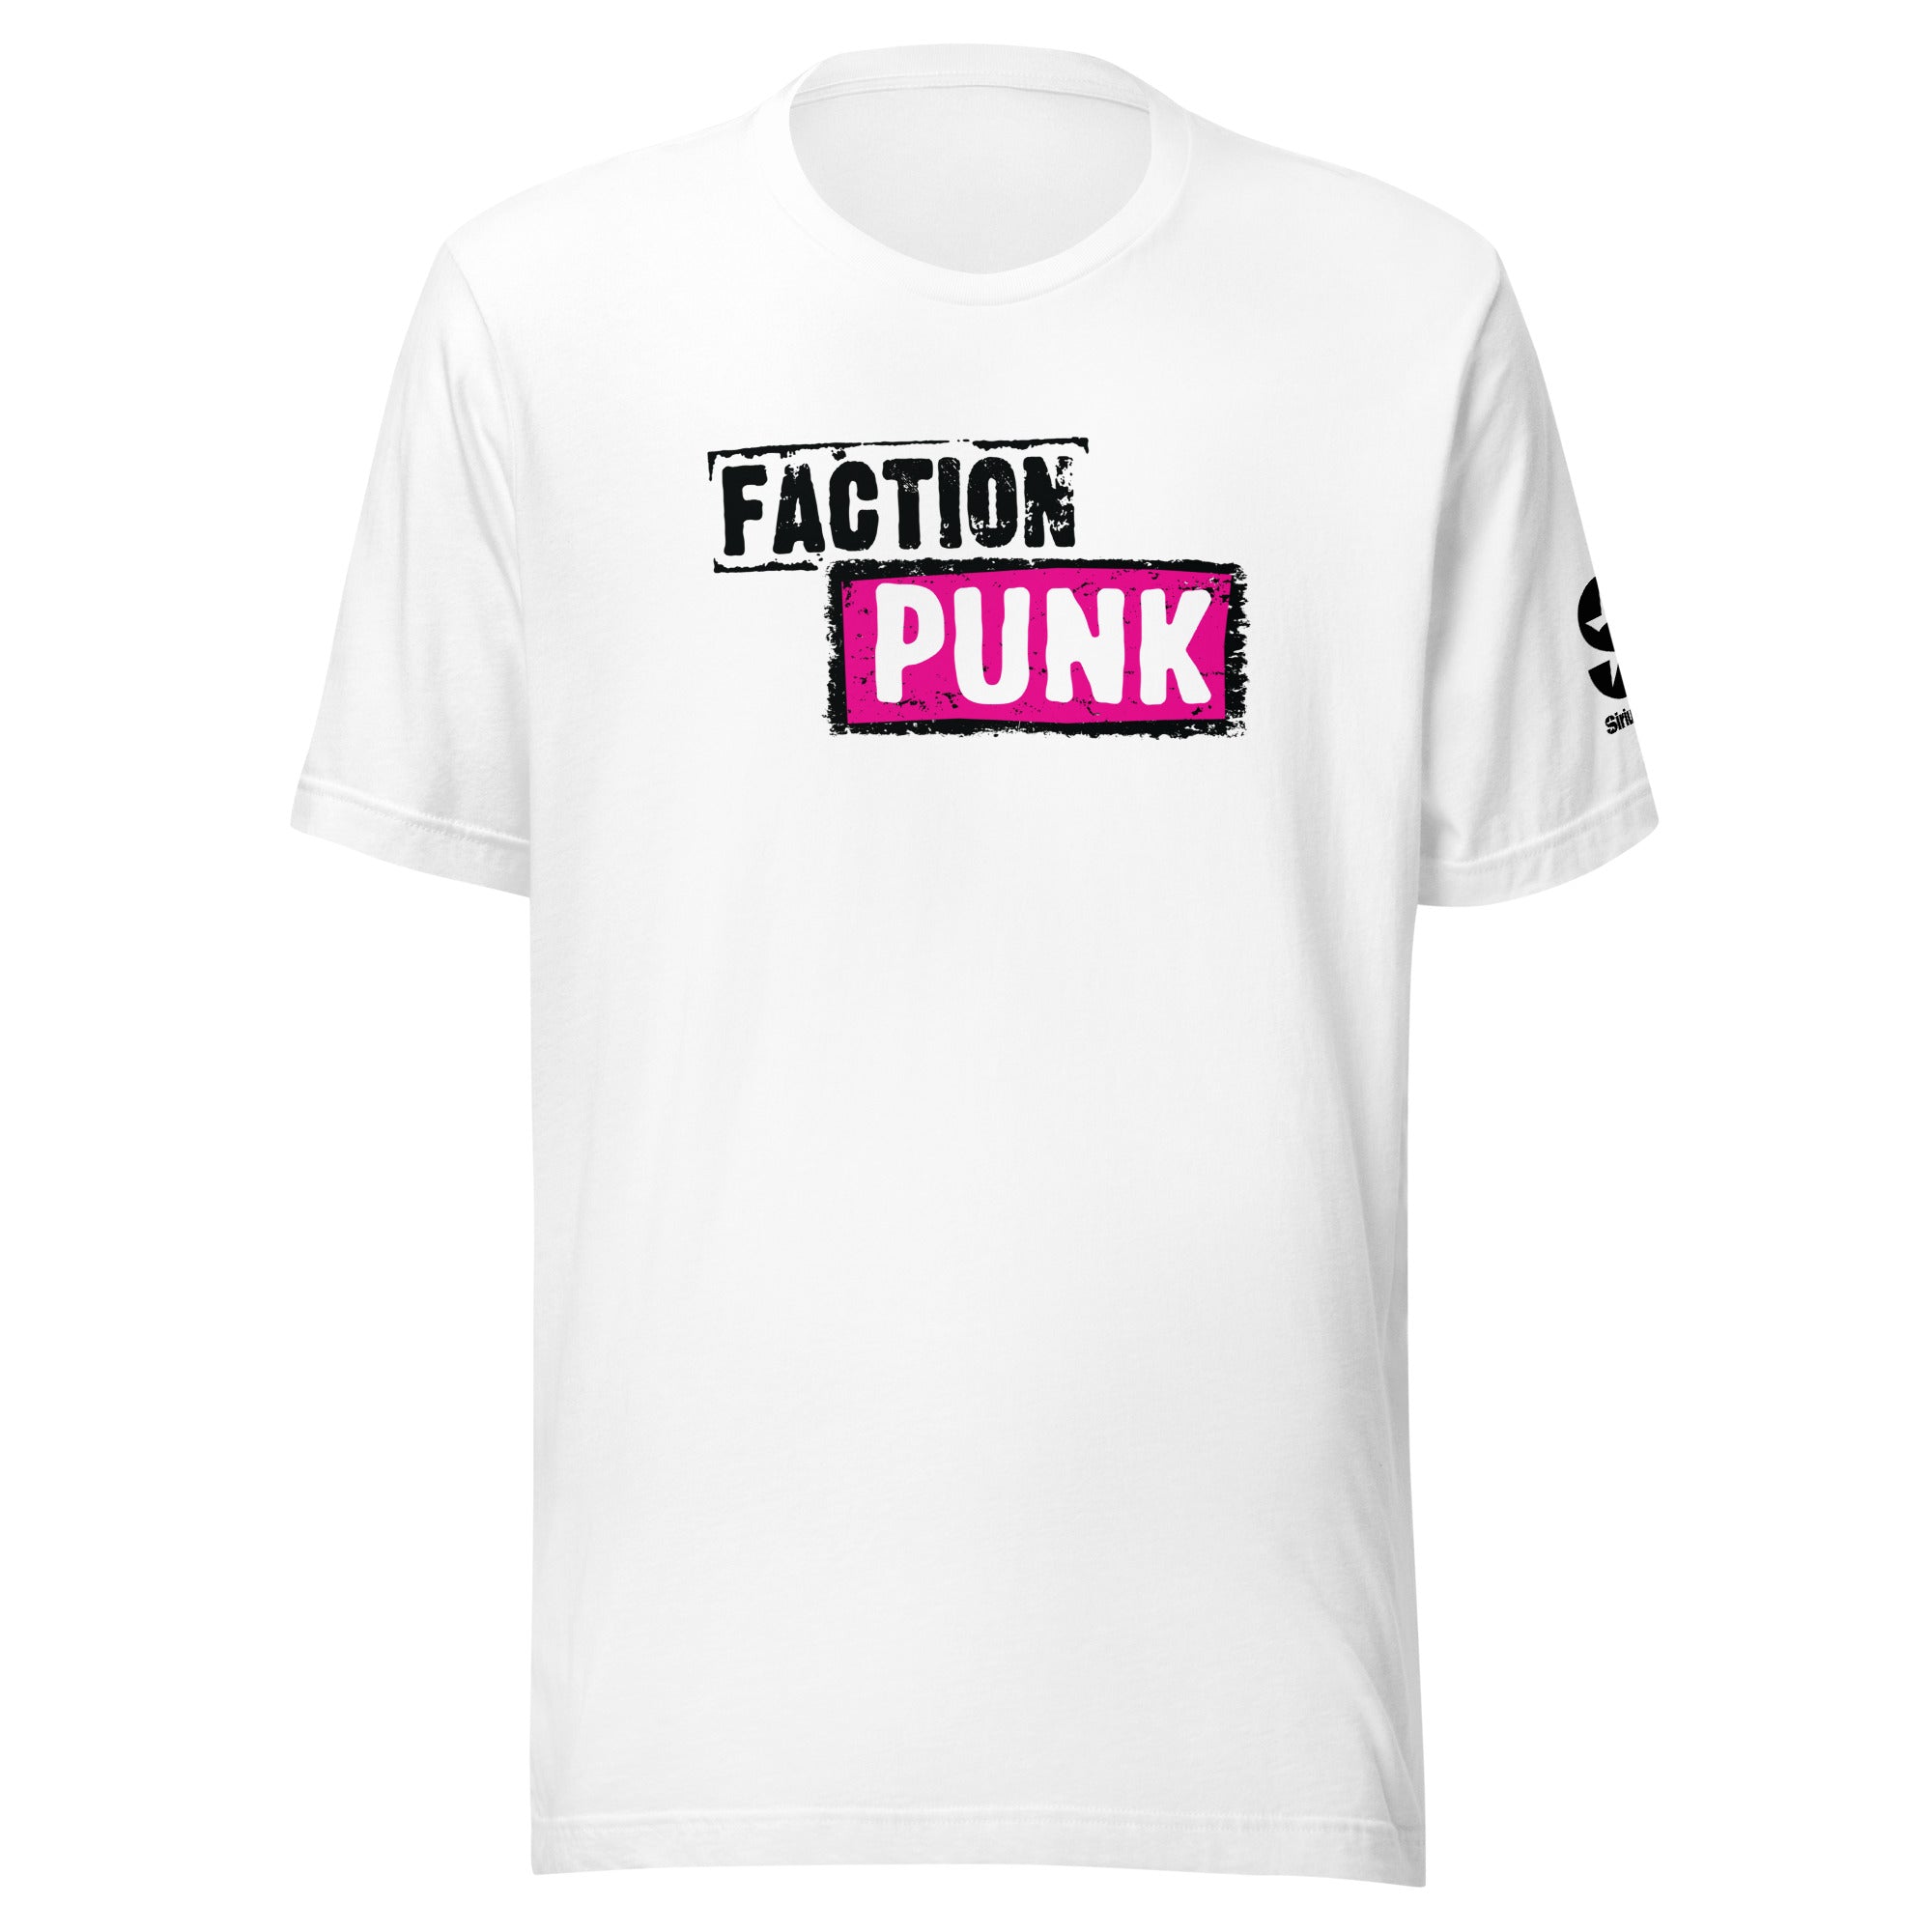 Faction Punk: T-shirt (White)